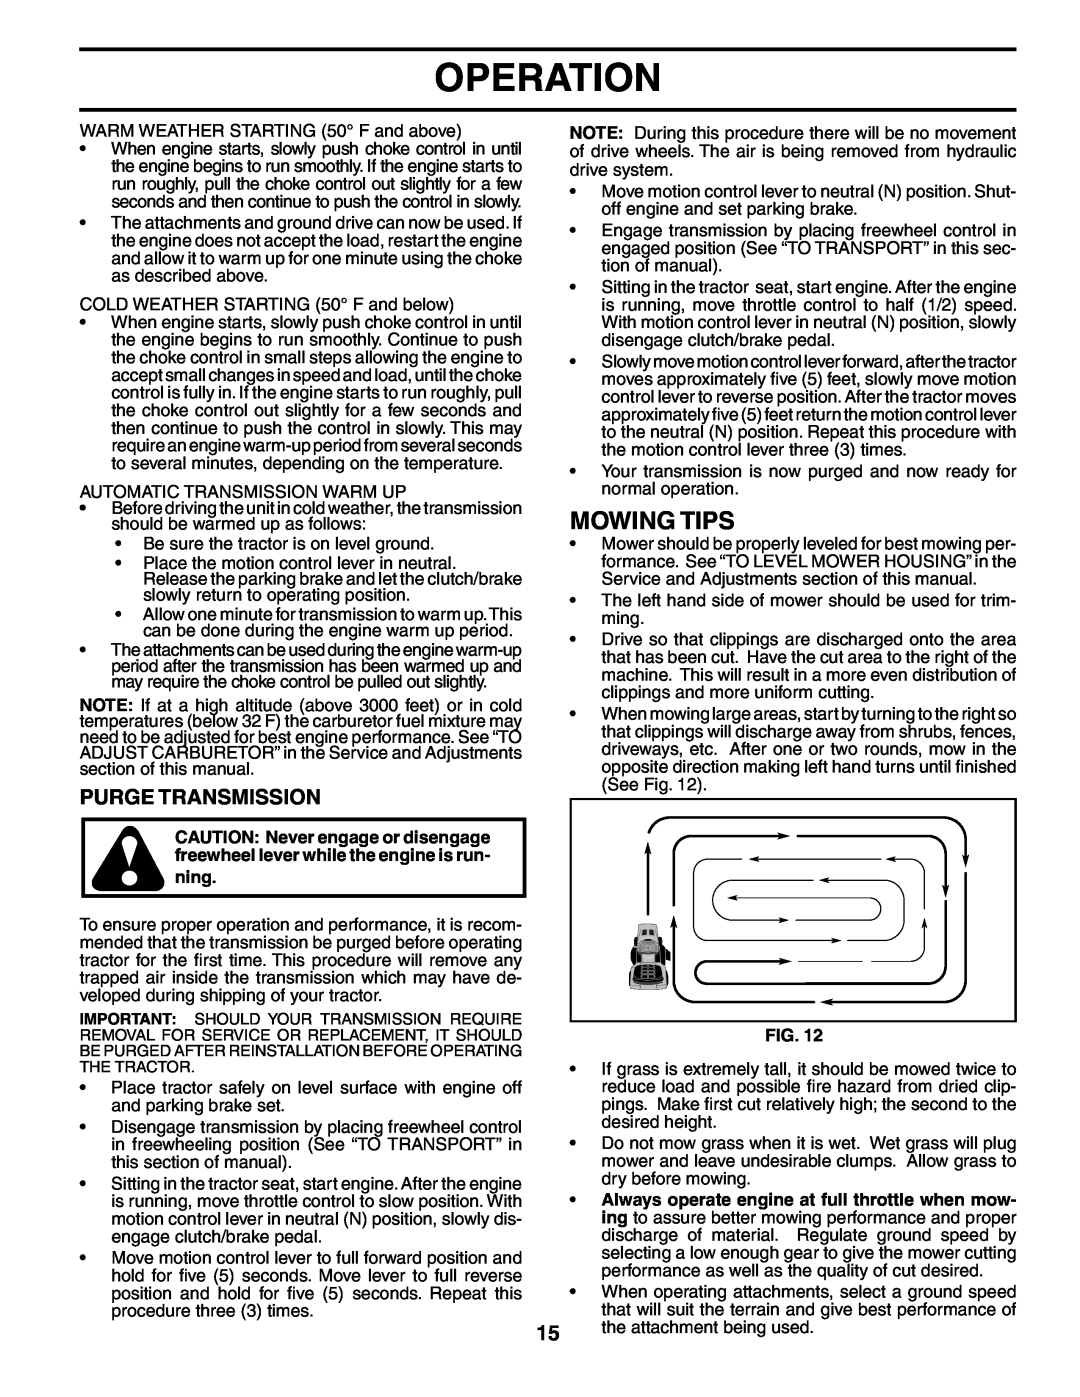 Poulan DB24H48YT manual Mowing Tips, Purge Transmission, Operation 